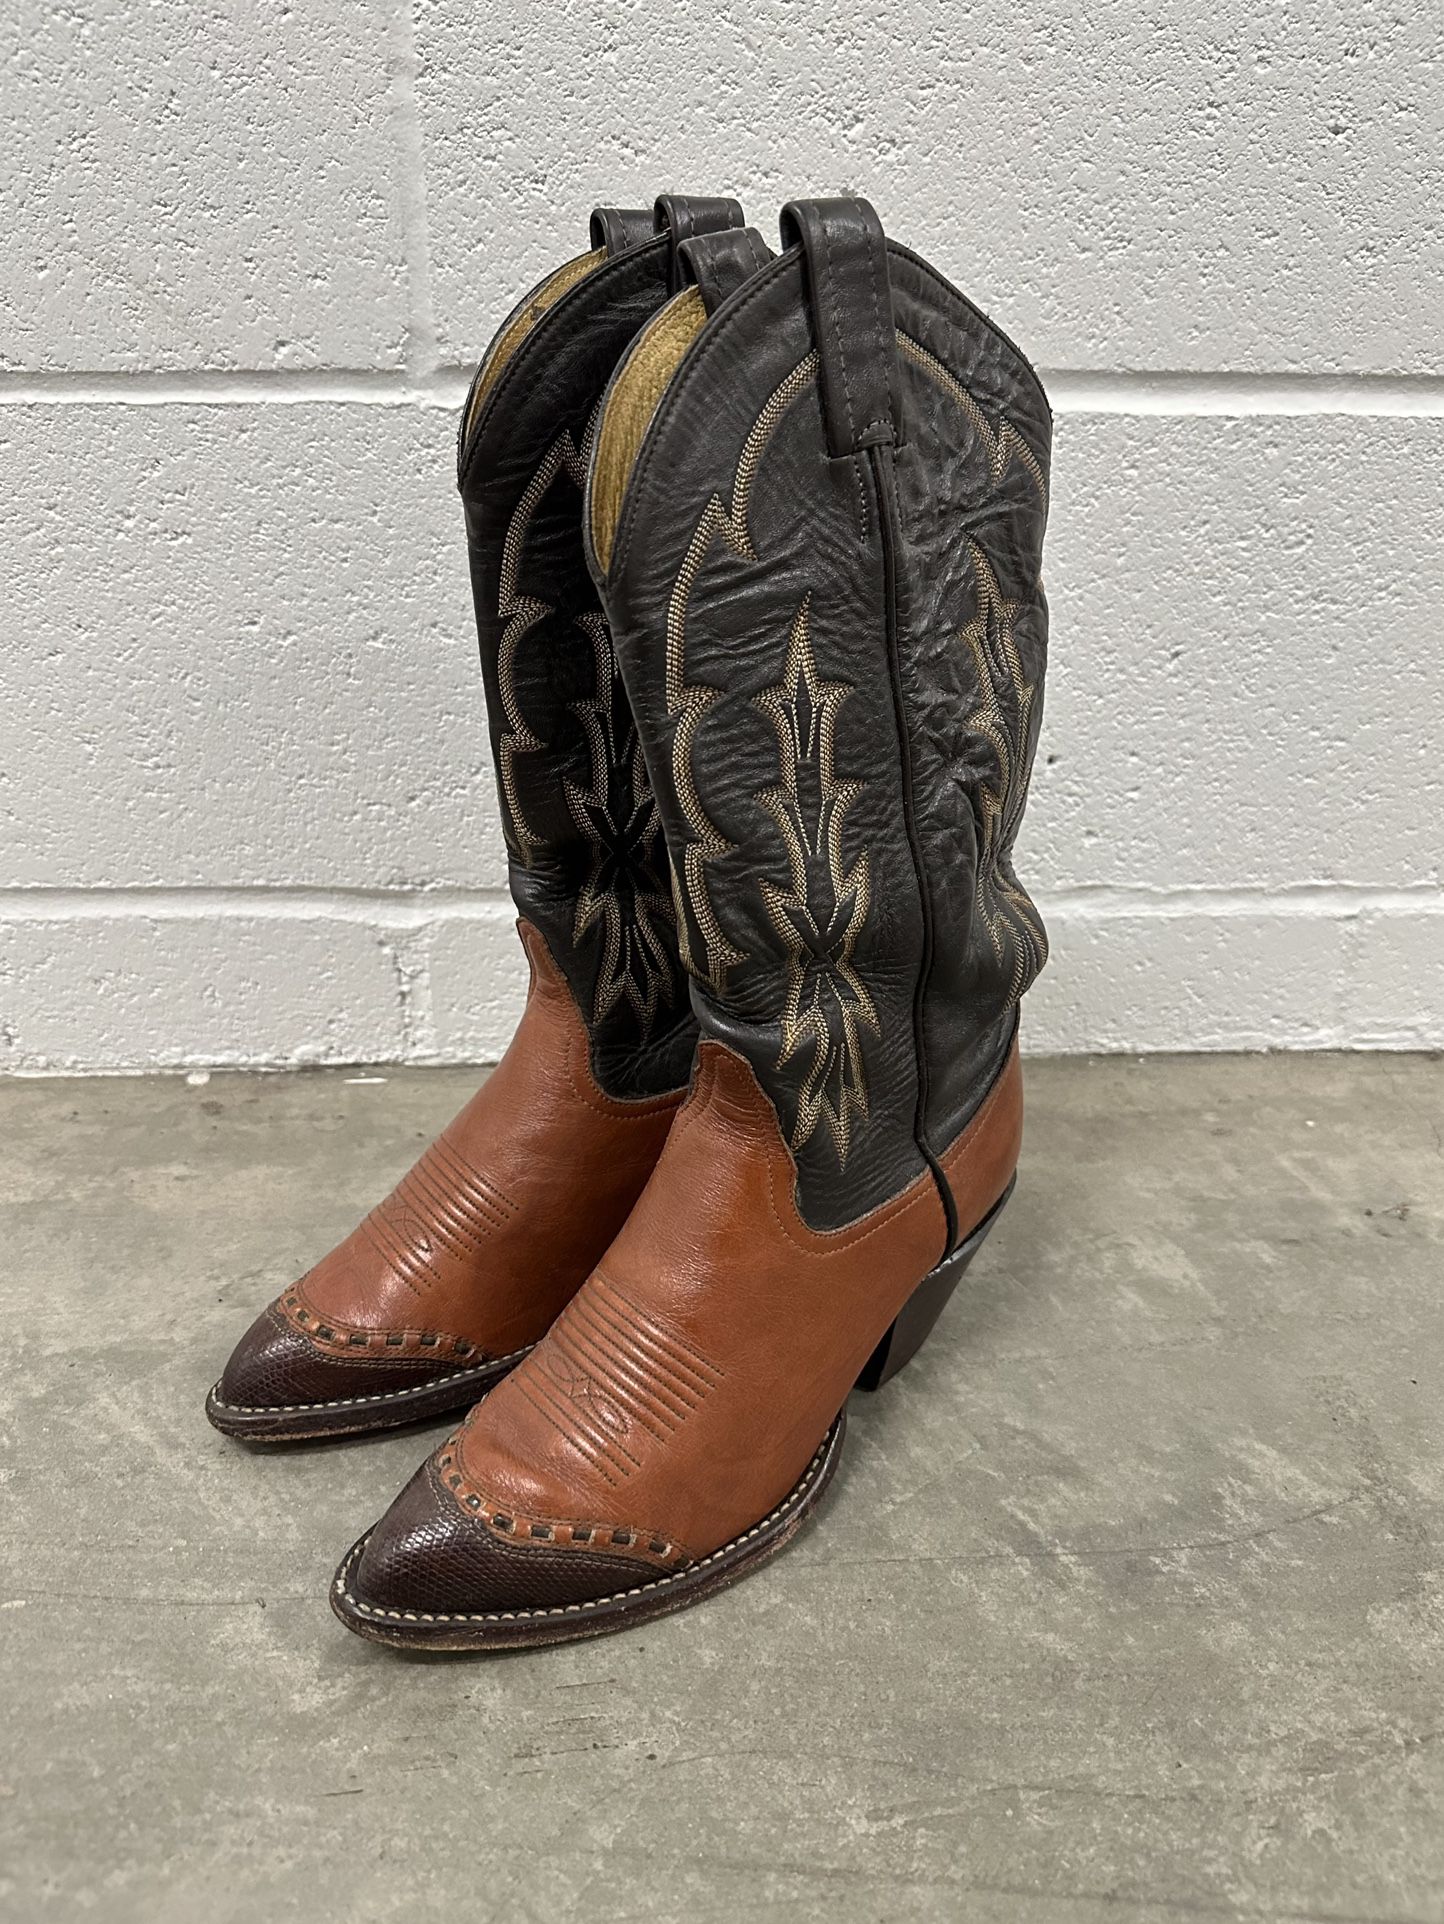 Vintage Tony Lama Cowboy Western Boots Not Justin Montana Redwing Timberland